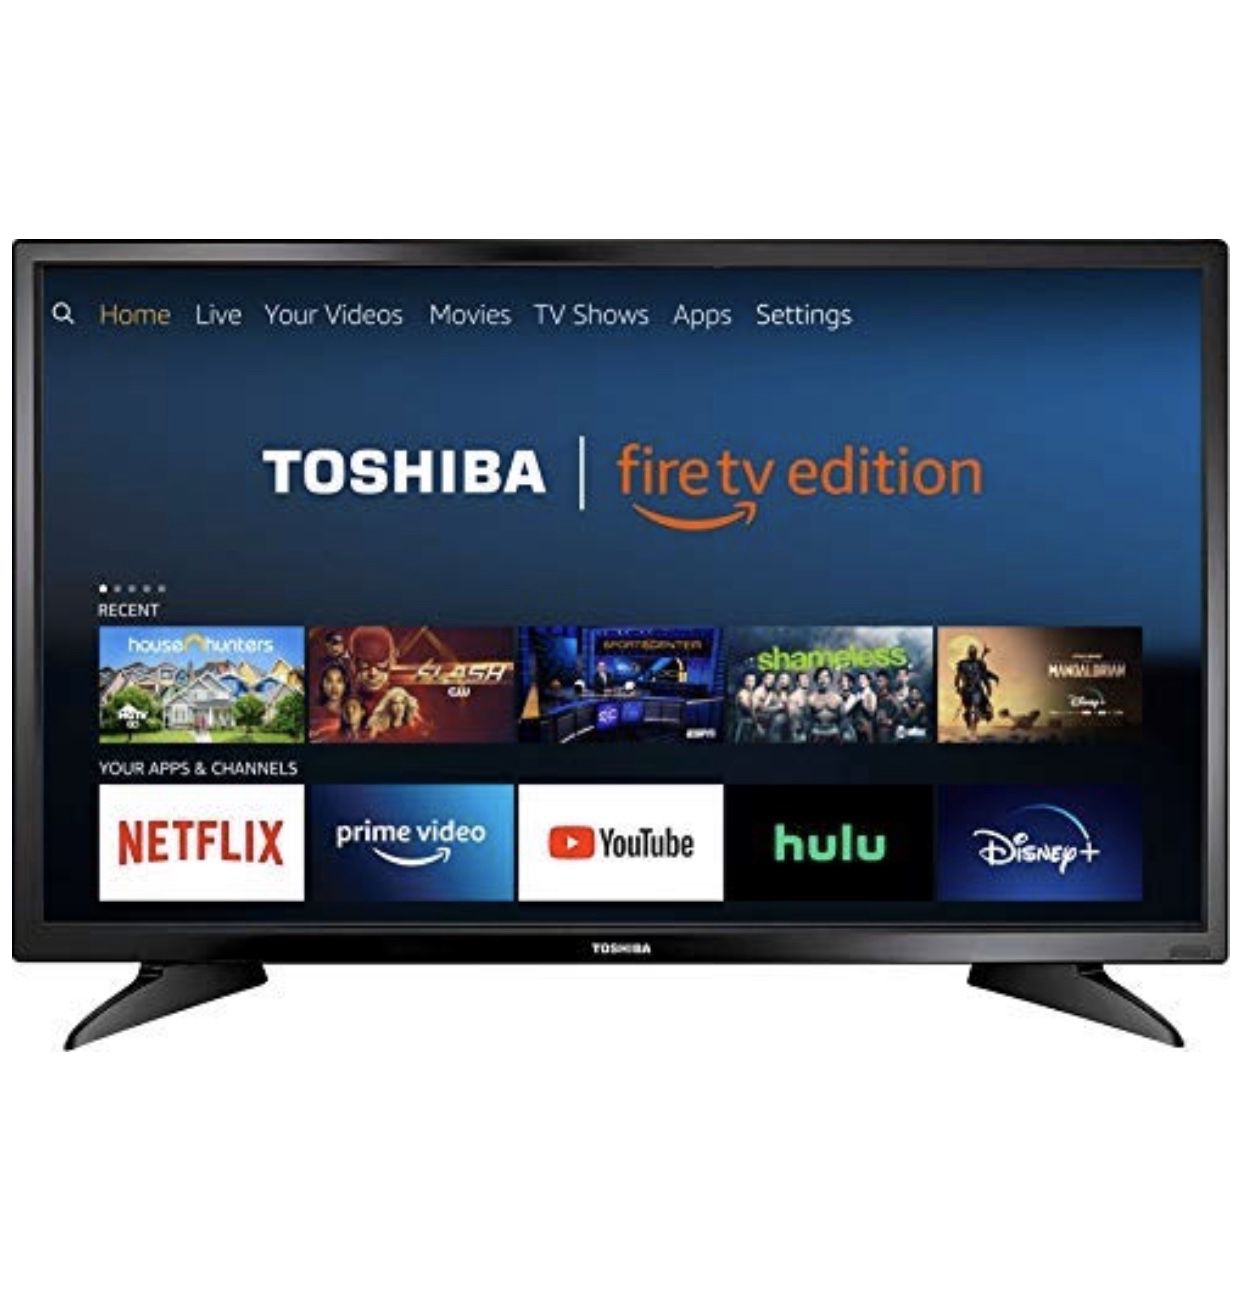 Toshiba 32LF221U19 32-inch 720p HD Smart LED TV - Fire TV Edition